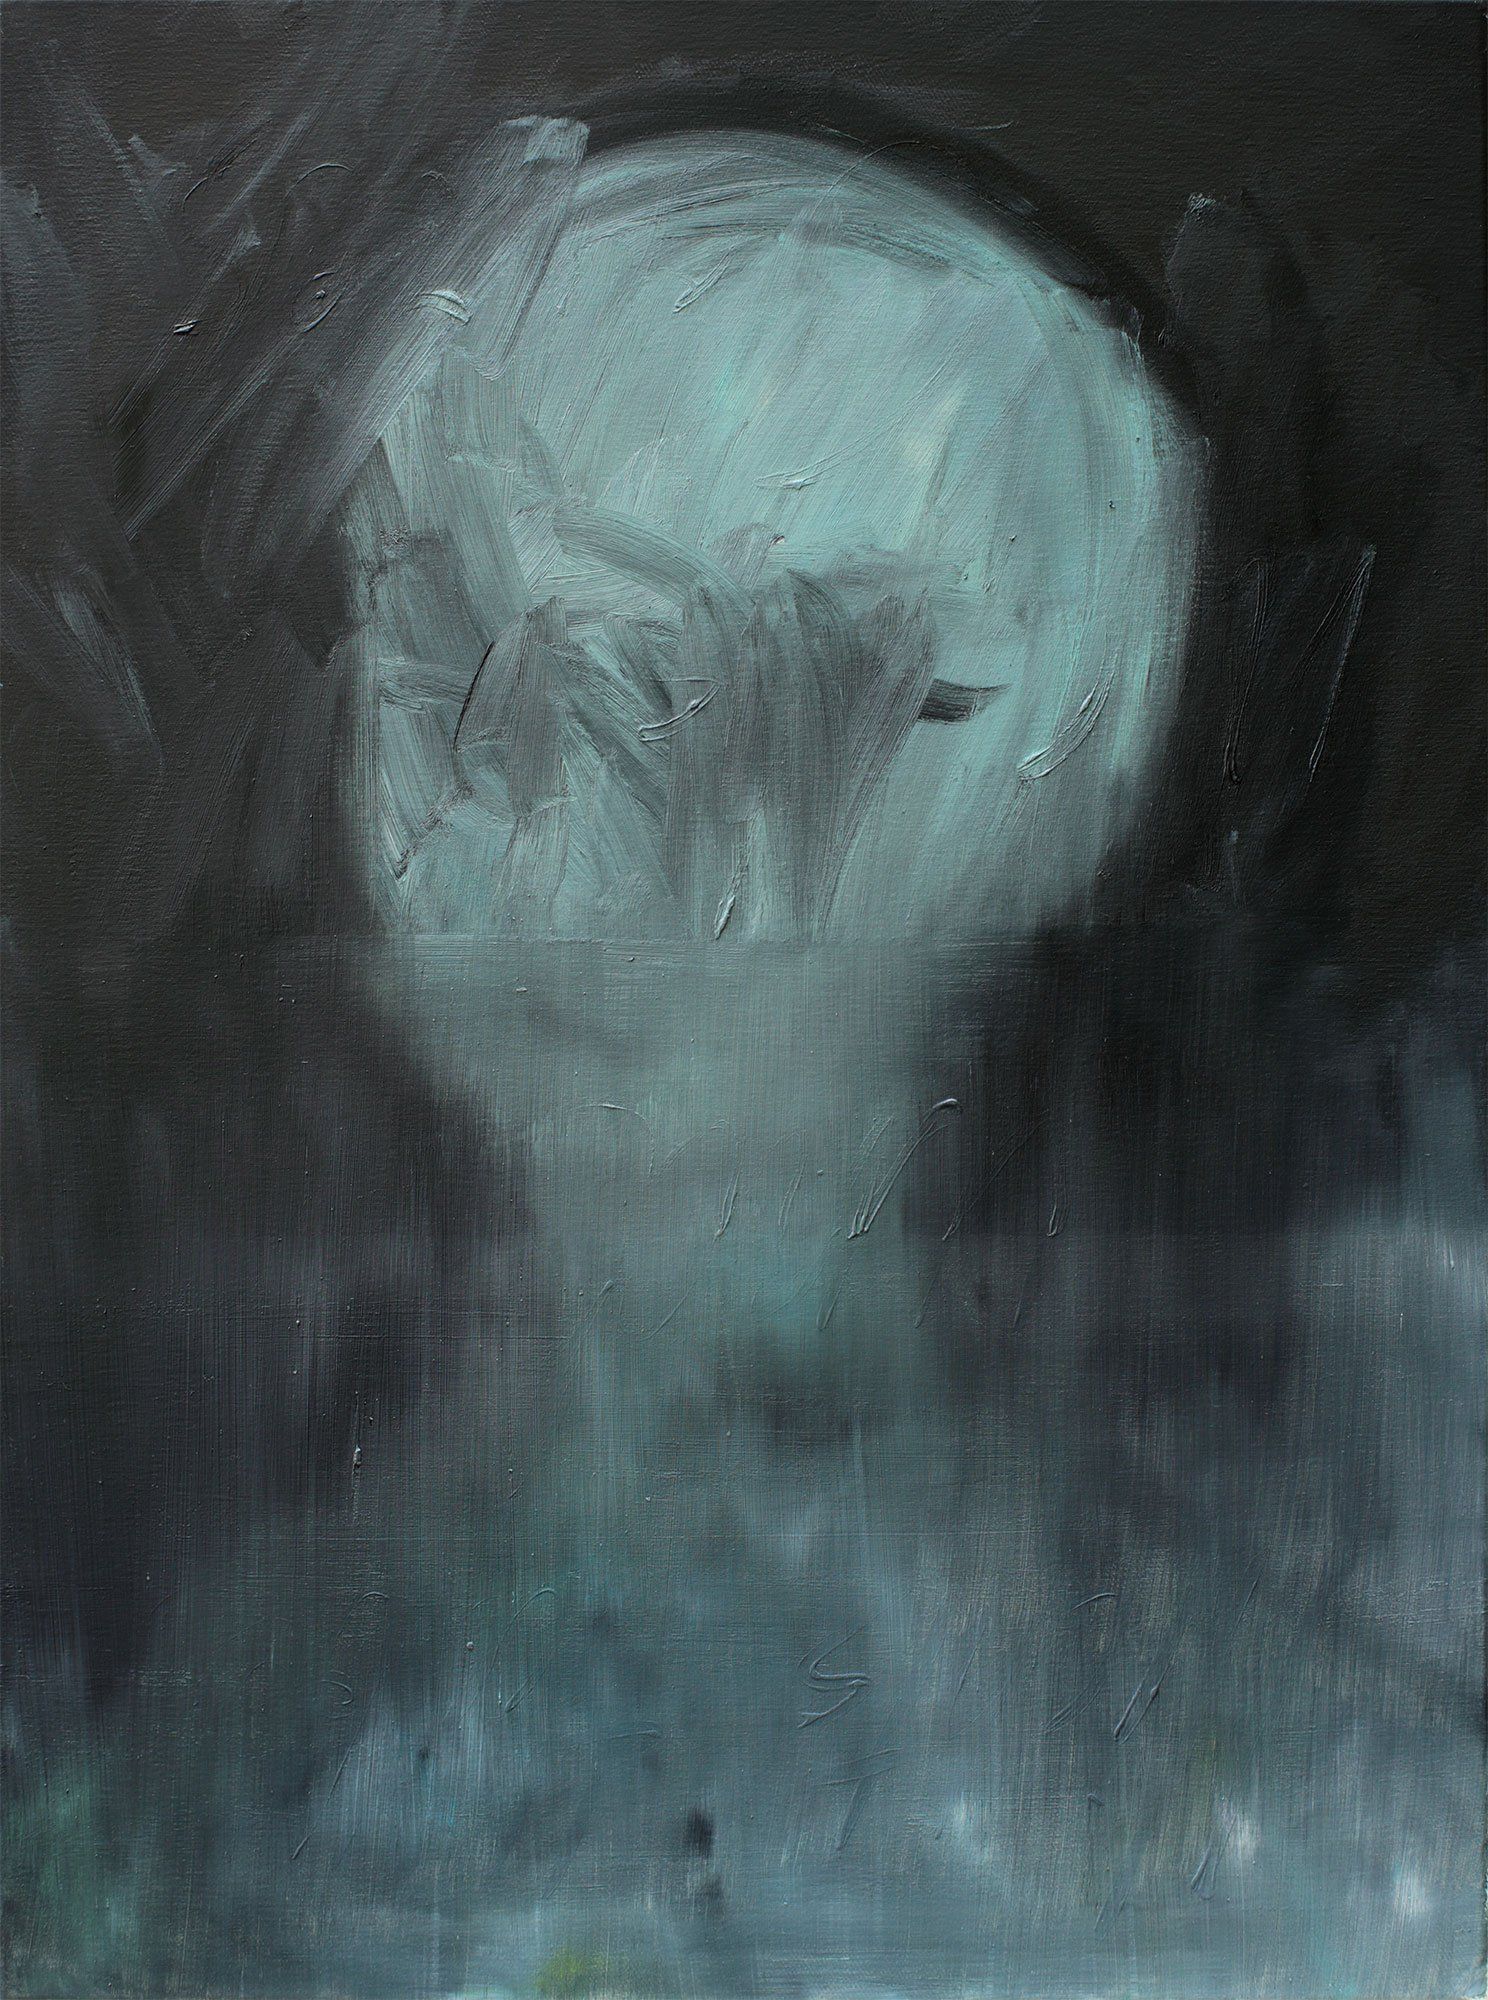 „Face 80x60 No. 8“ by Sebastian Bieniek (B1EN1EK), 2014. Oil on canvas, 80 cm. x 60 cm. Painting from the oeuvre of BieniekFace (Bieniek-Face) by the artist.